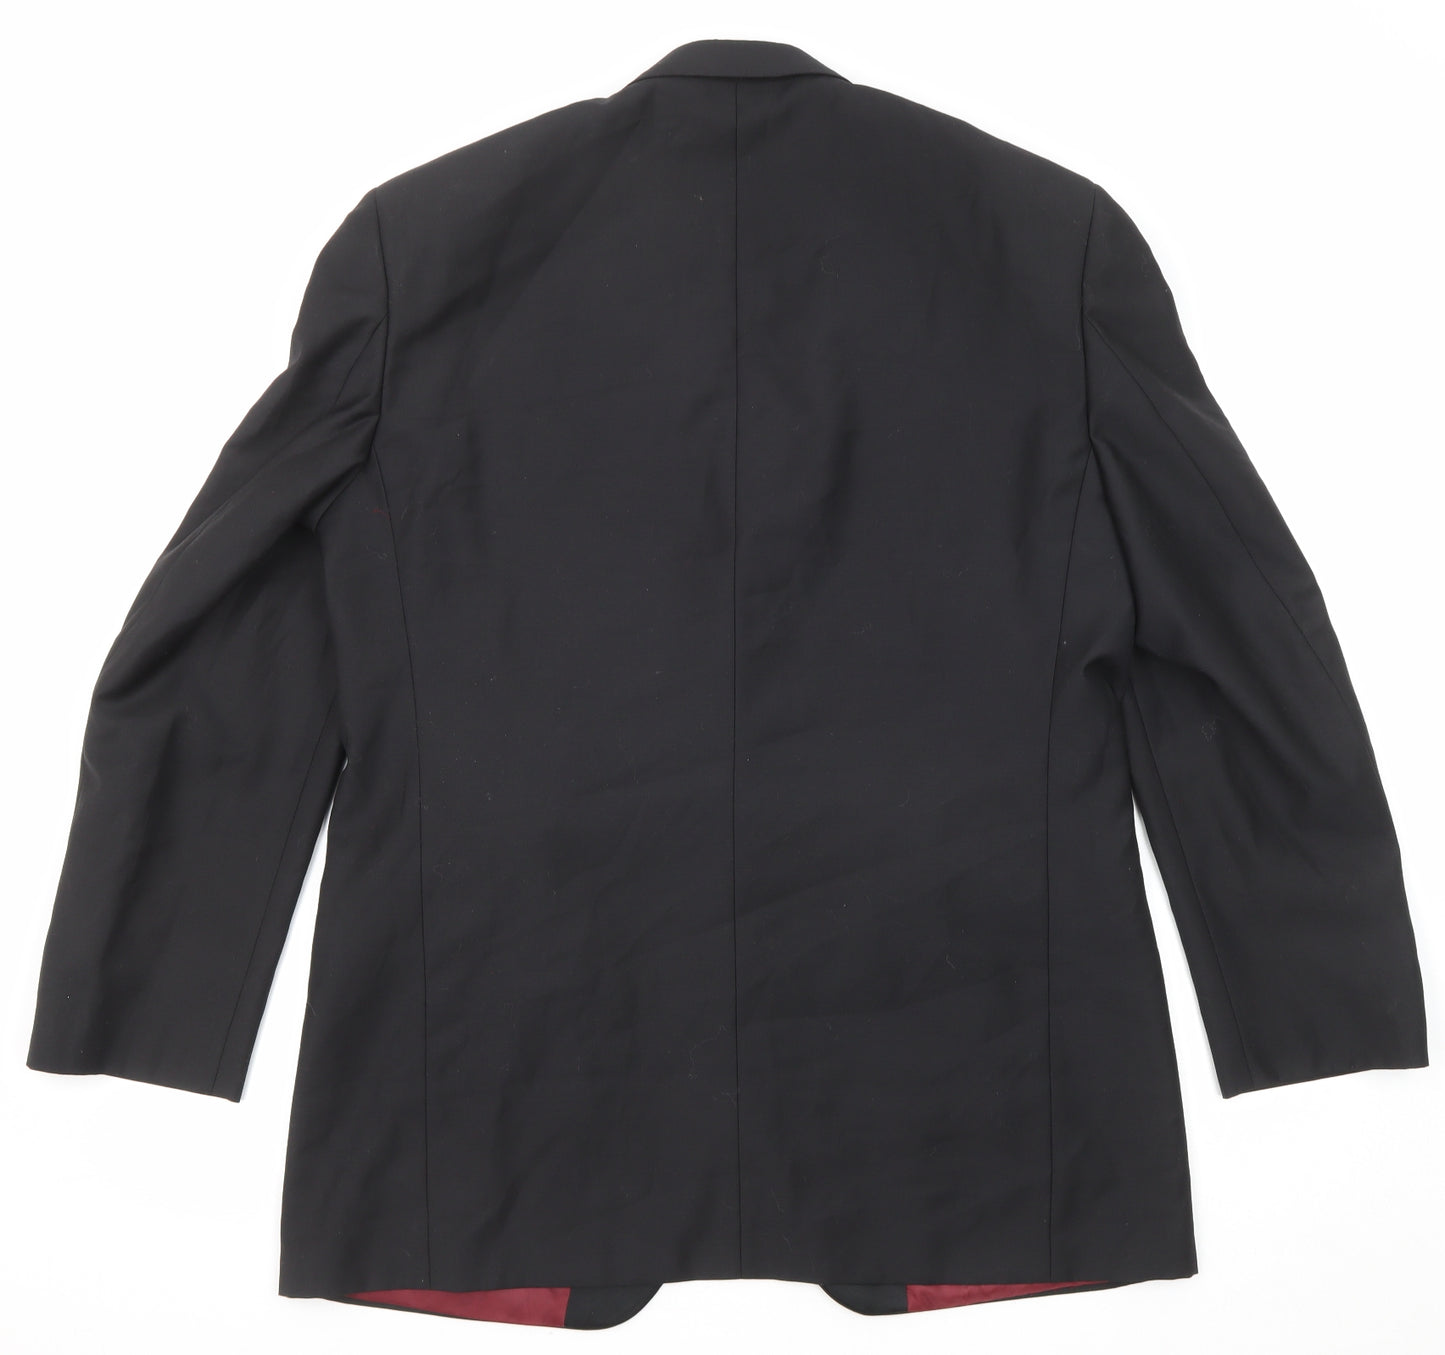 Scott & Taylor Mens Black Polyester Tuxedo Suit Jacket Size 42 Regular